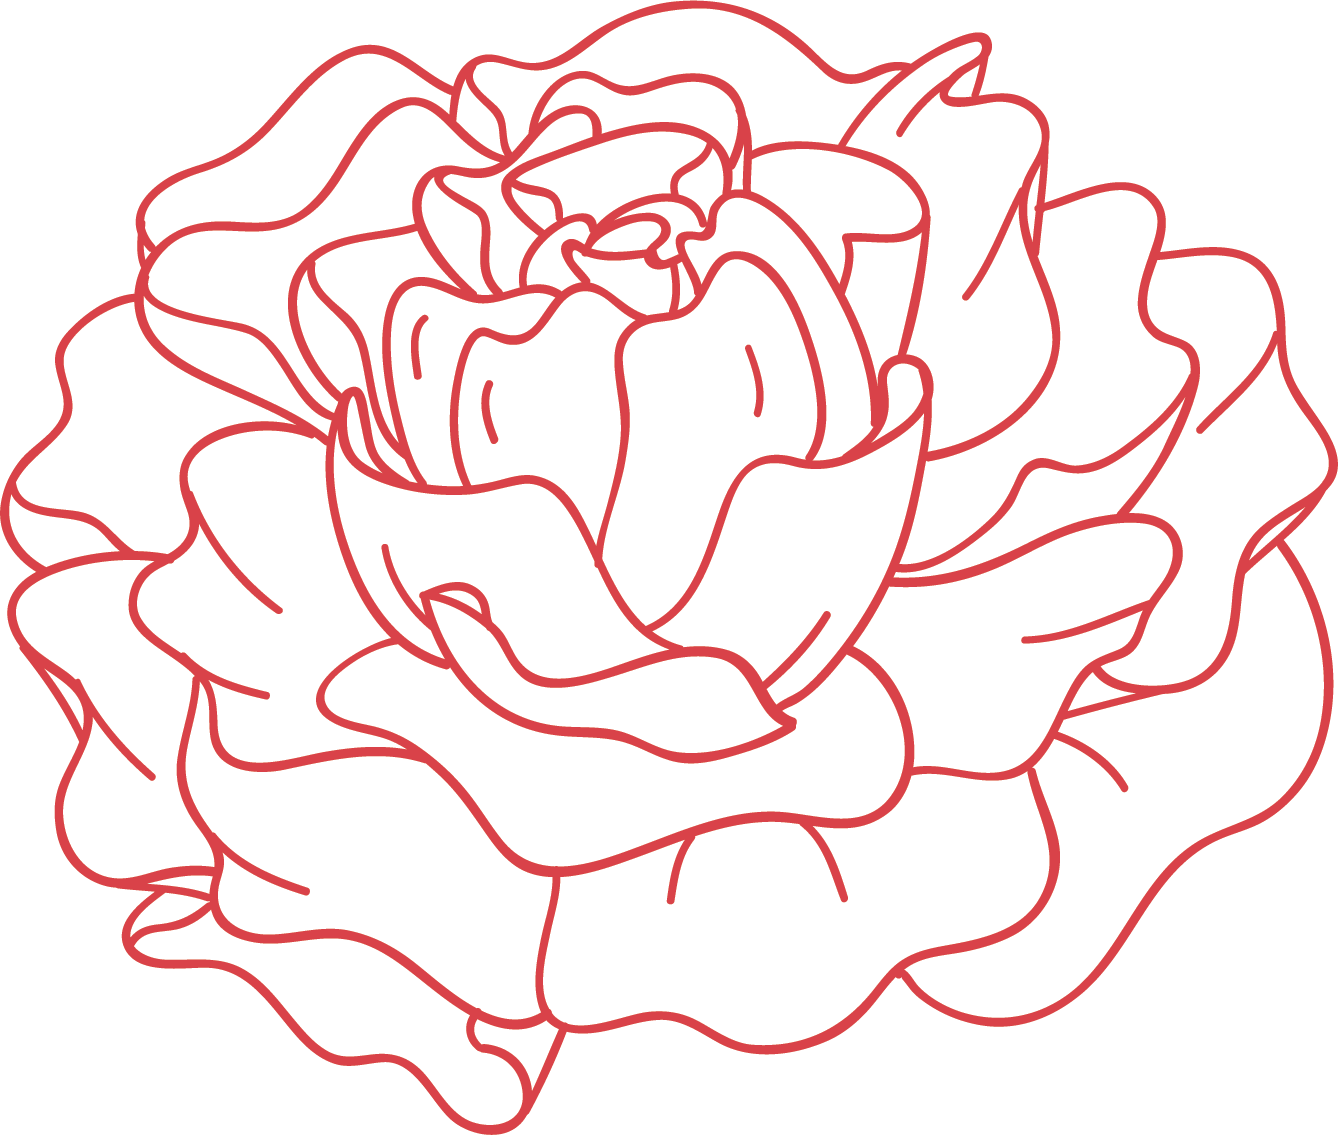 Carnation drawing